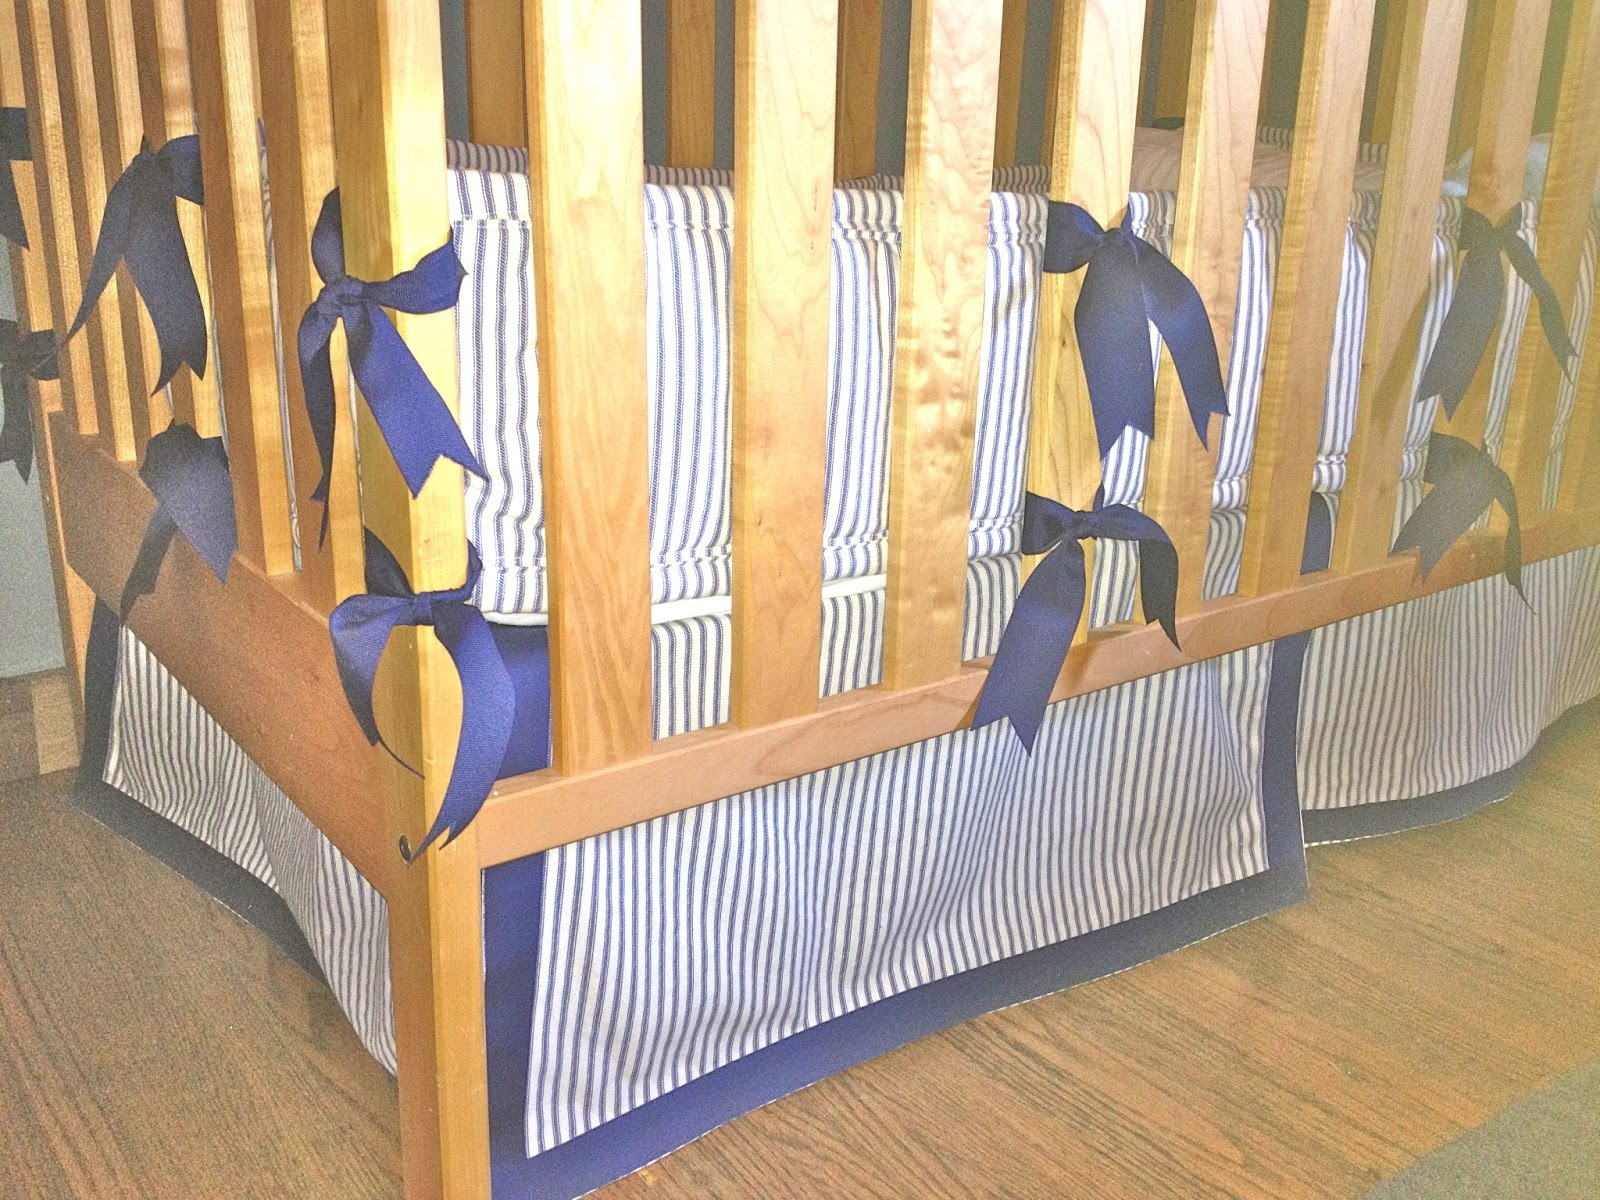 Best ideas about DIY Crib Bedding
. Save or Pin Rosa Beltran Design DIY CRIB BEDDING Now.